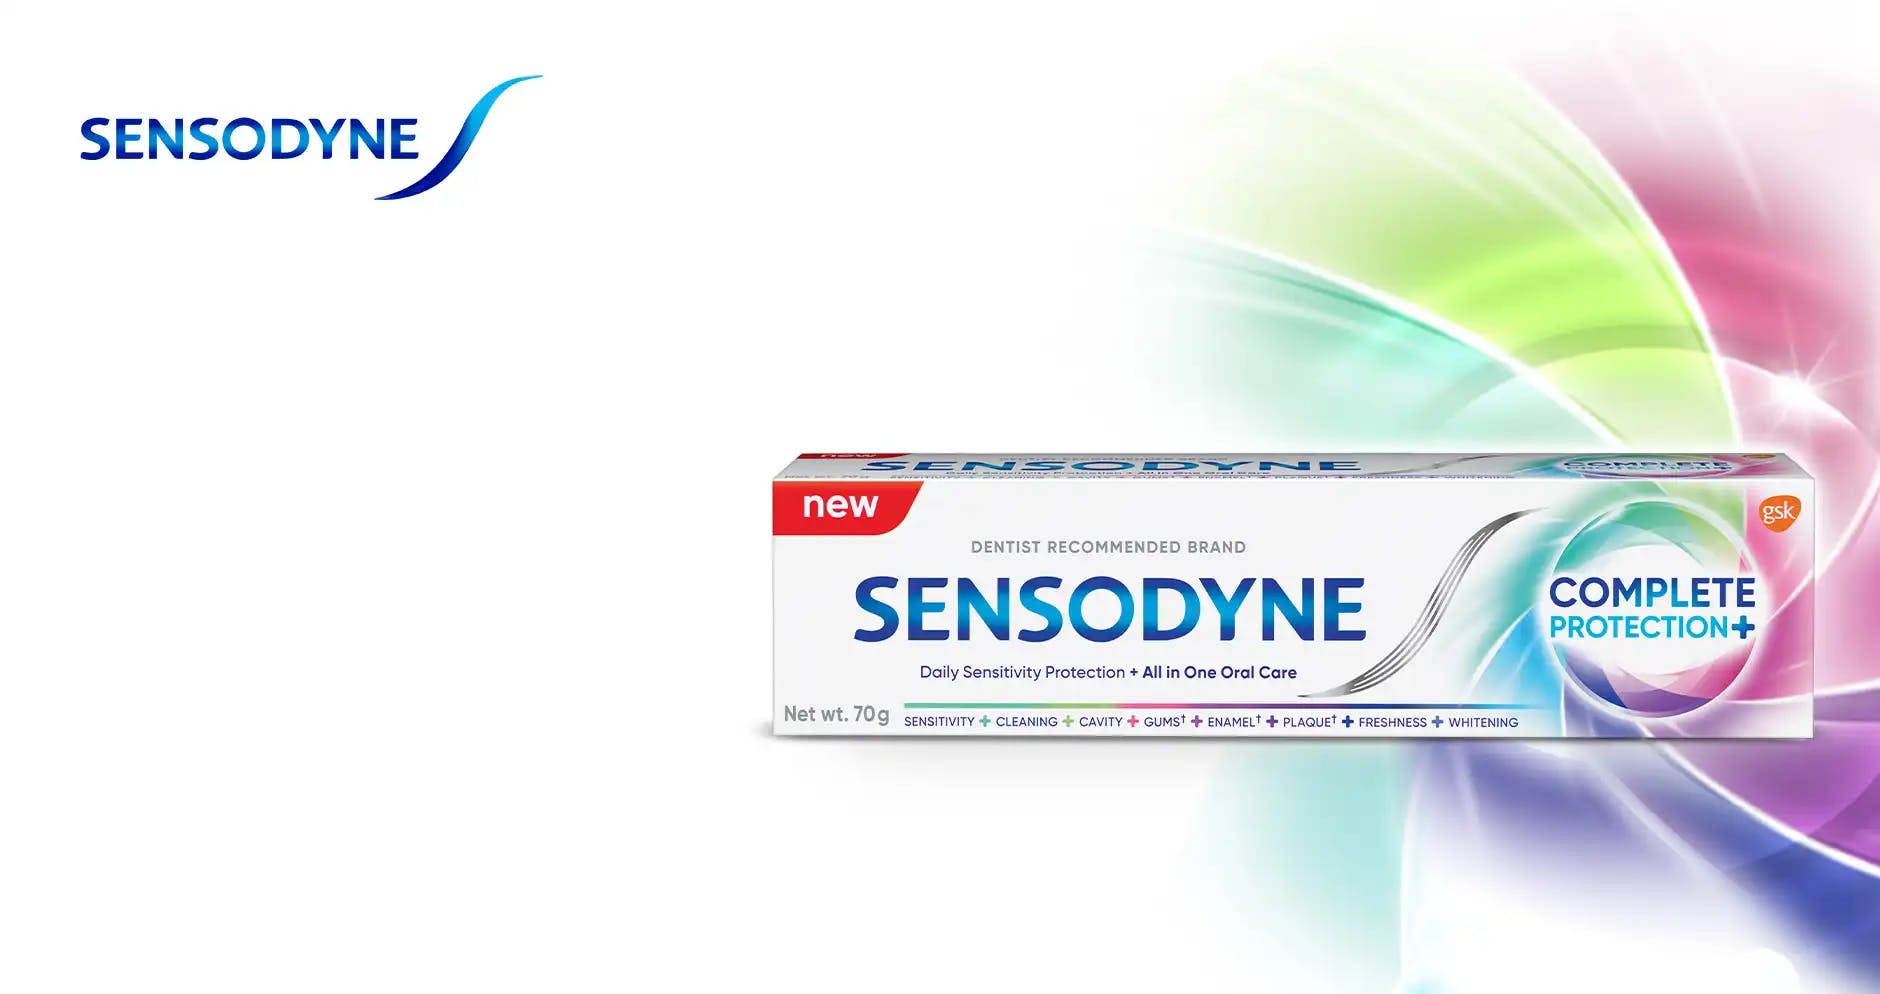 Deep clean sensitive teeth with Sensodyne